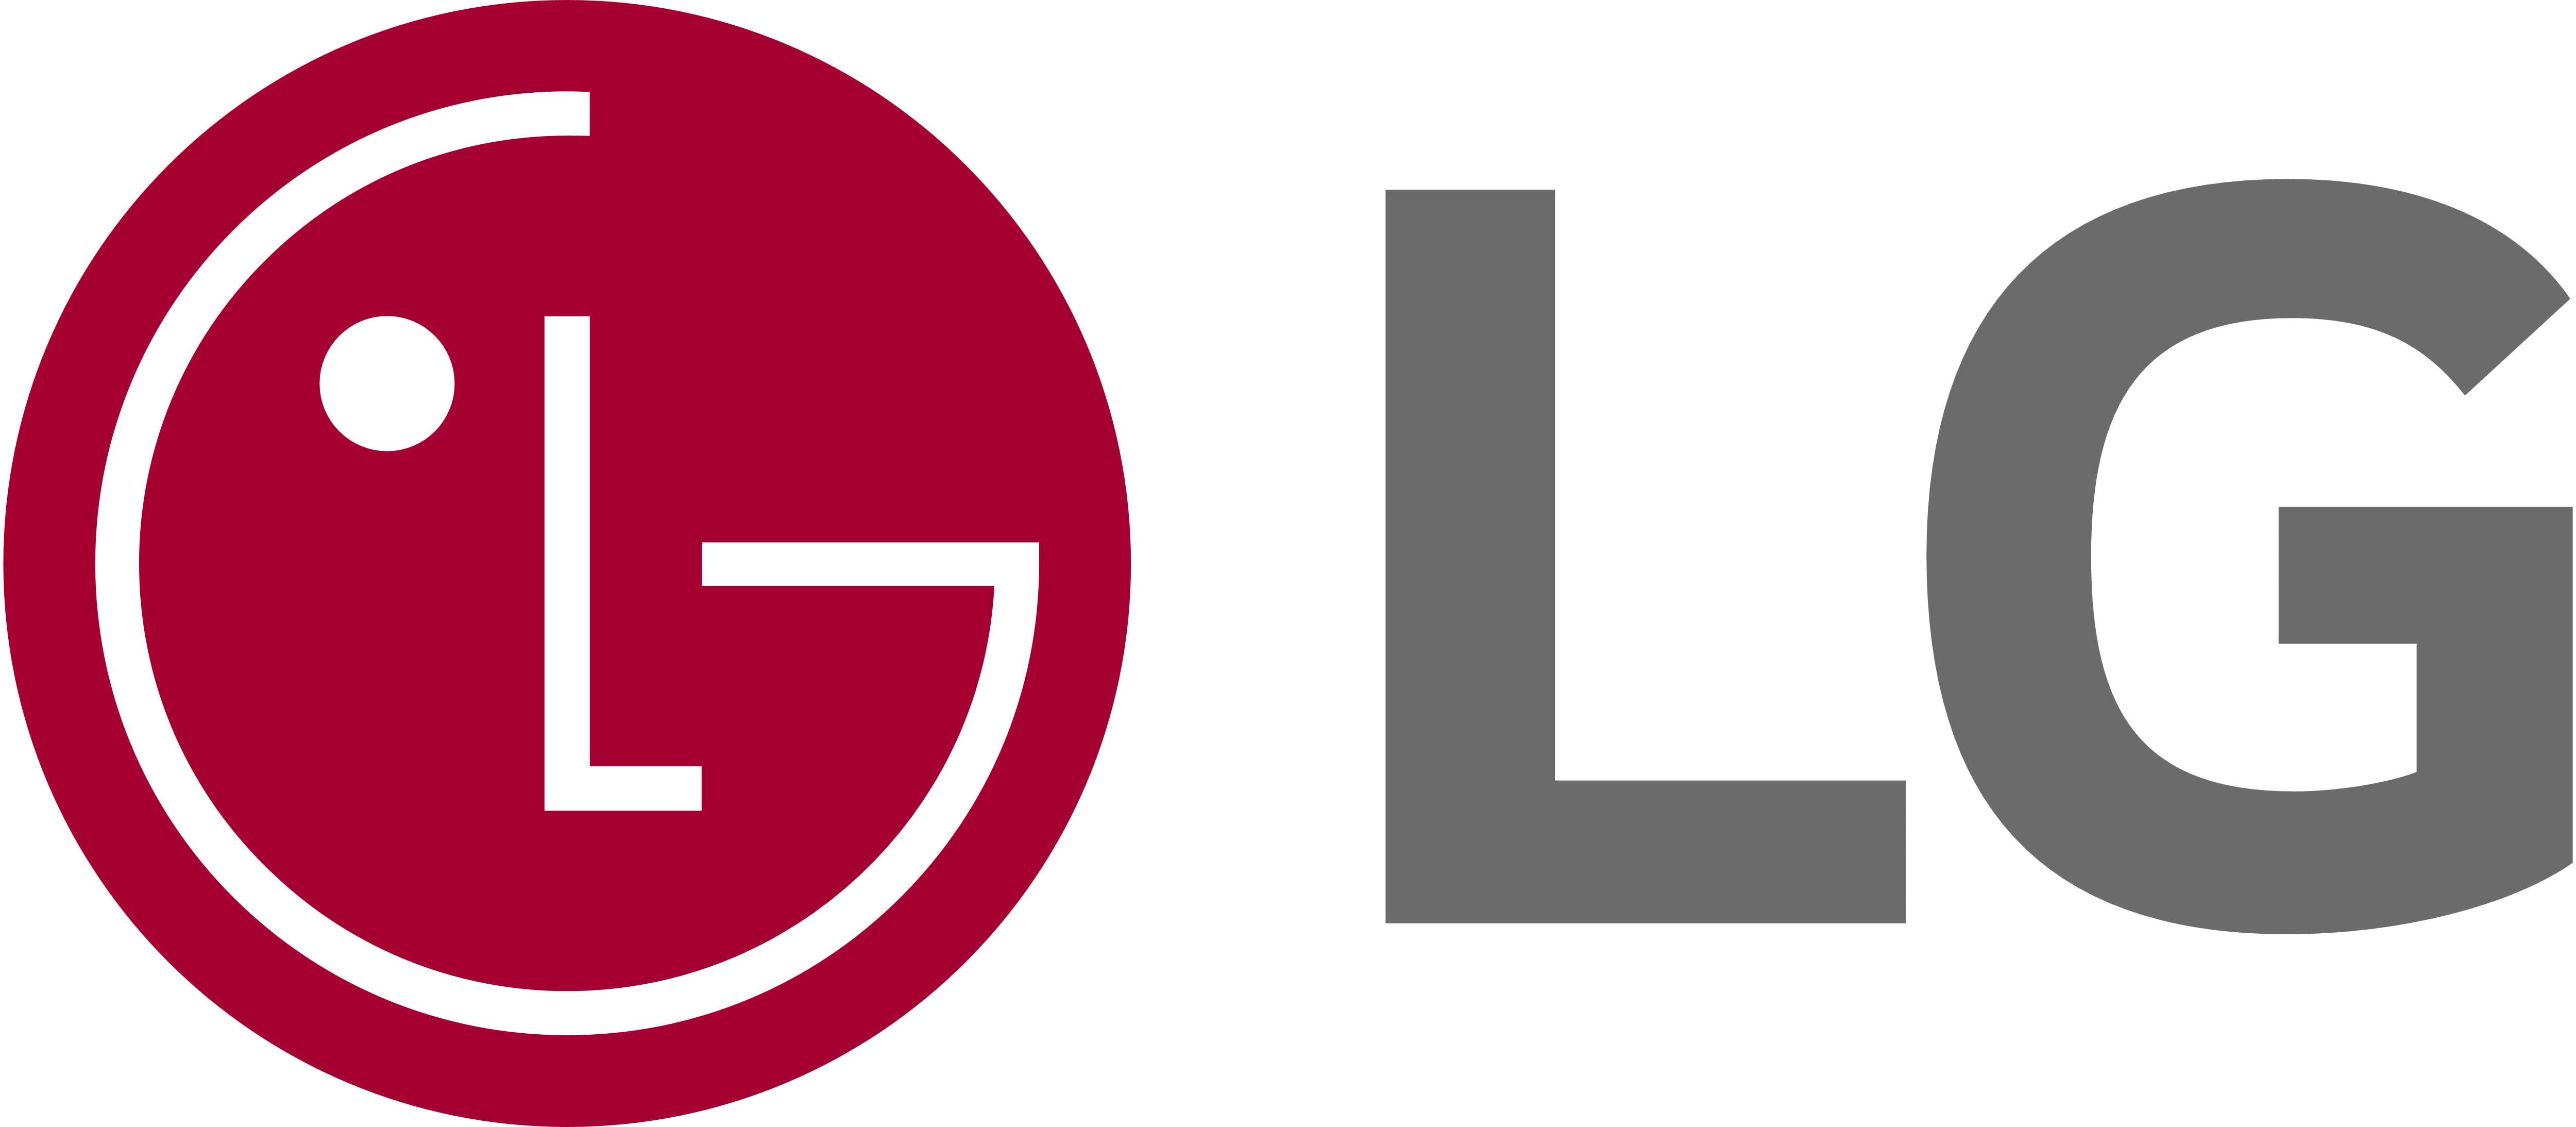 LG Washer Appliance Repair, Maytag Washer Repair